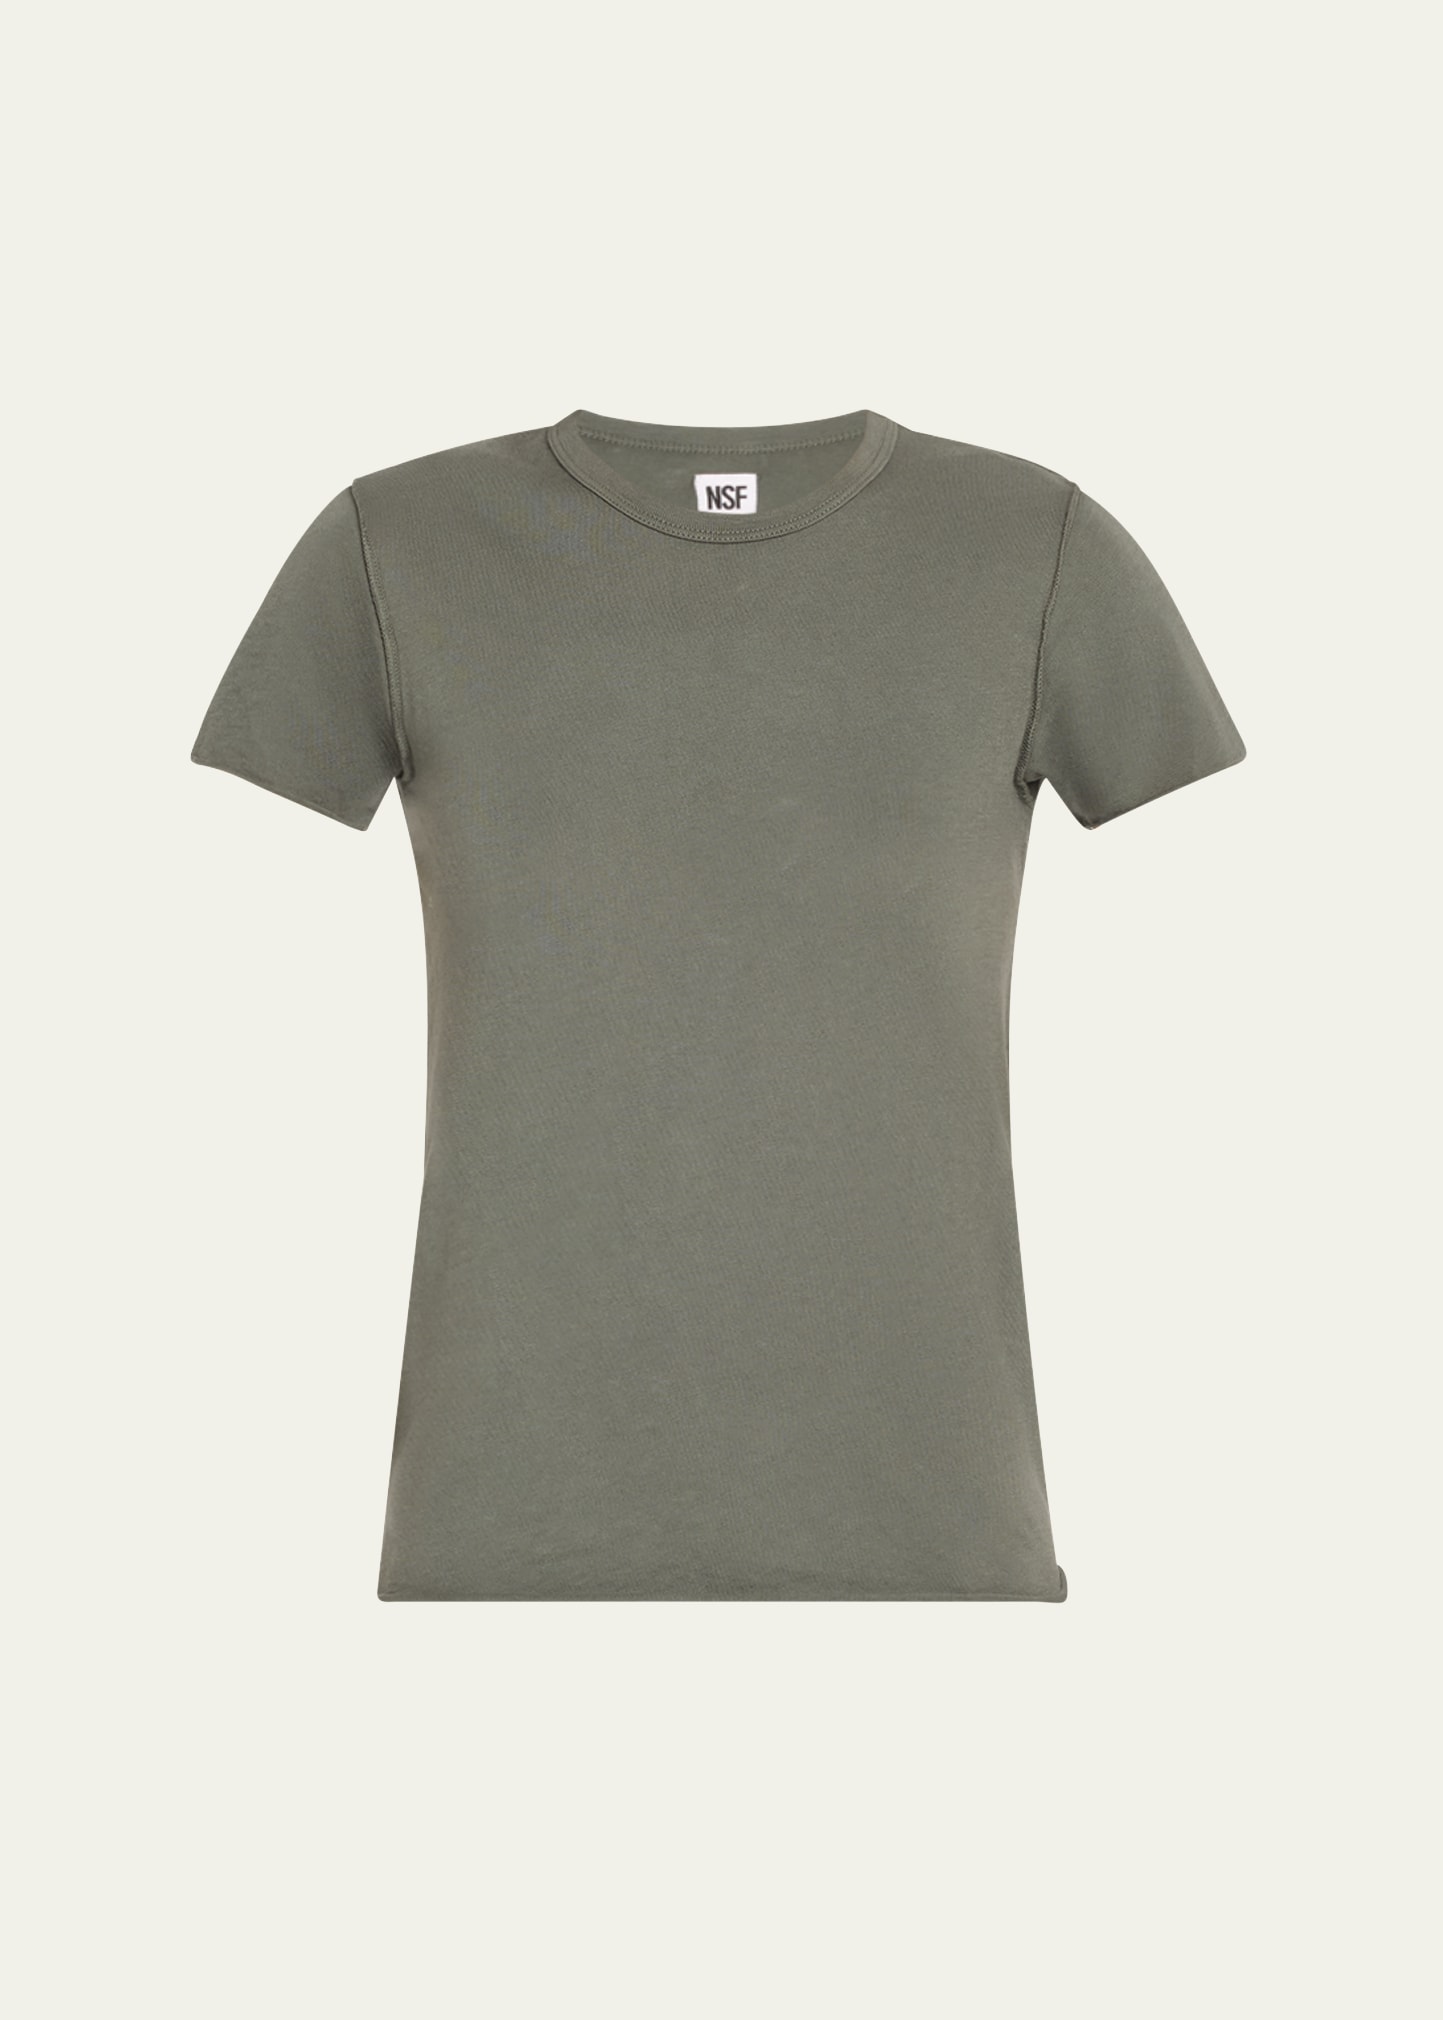 Alessi Slim Cotton Short-Sleeve T-Shirt